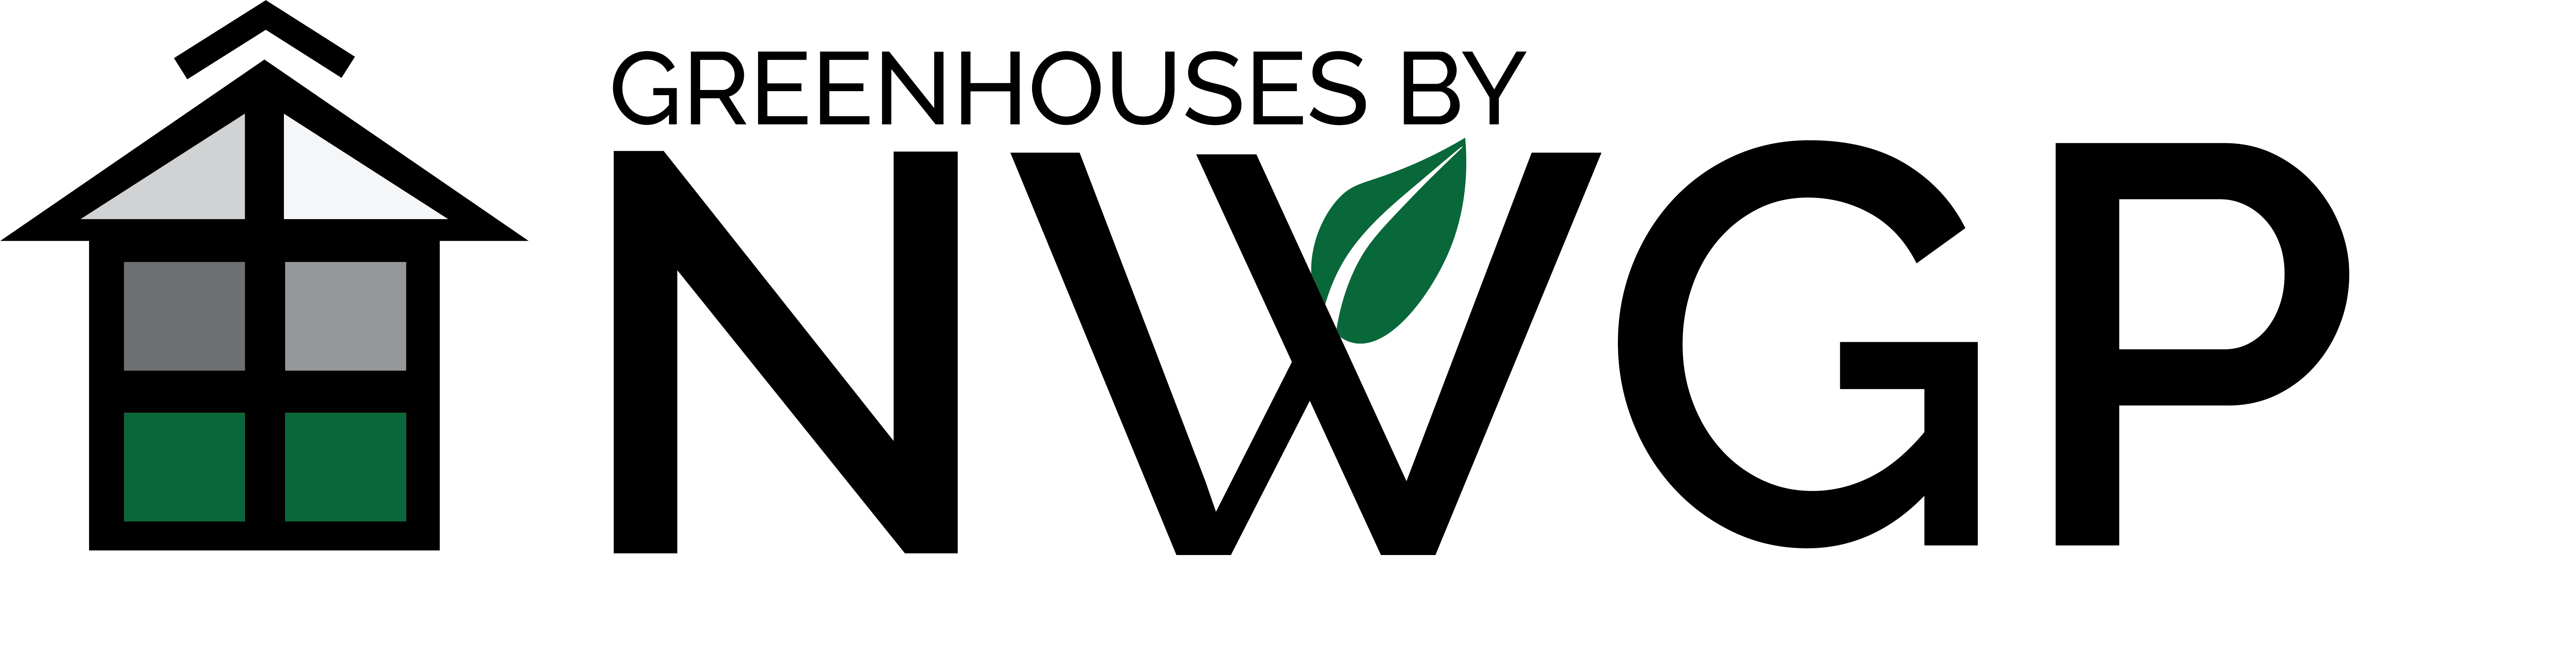 business internet nw green panels logo